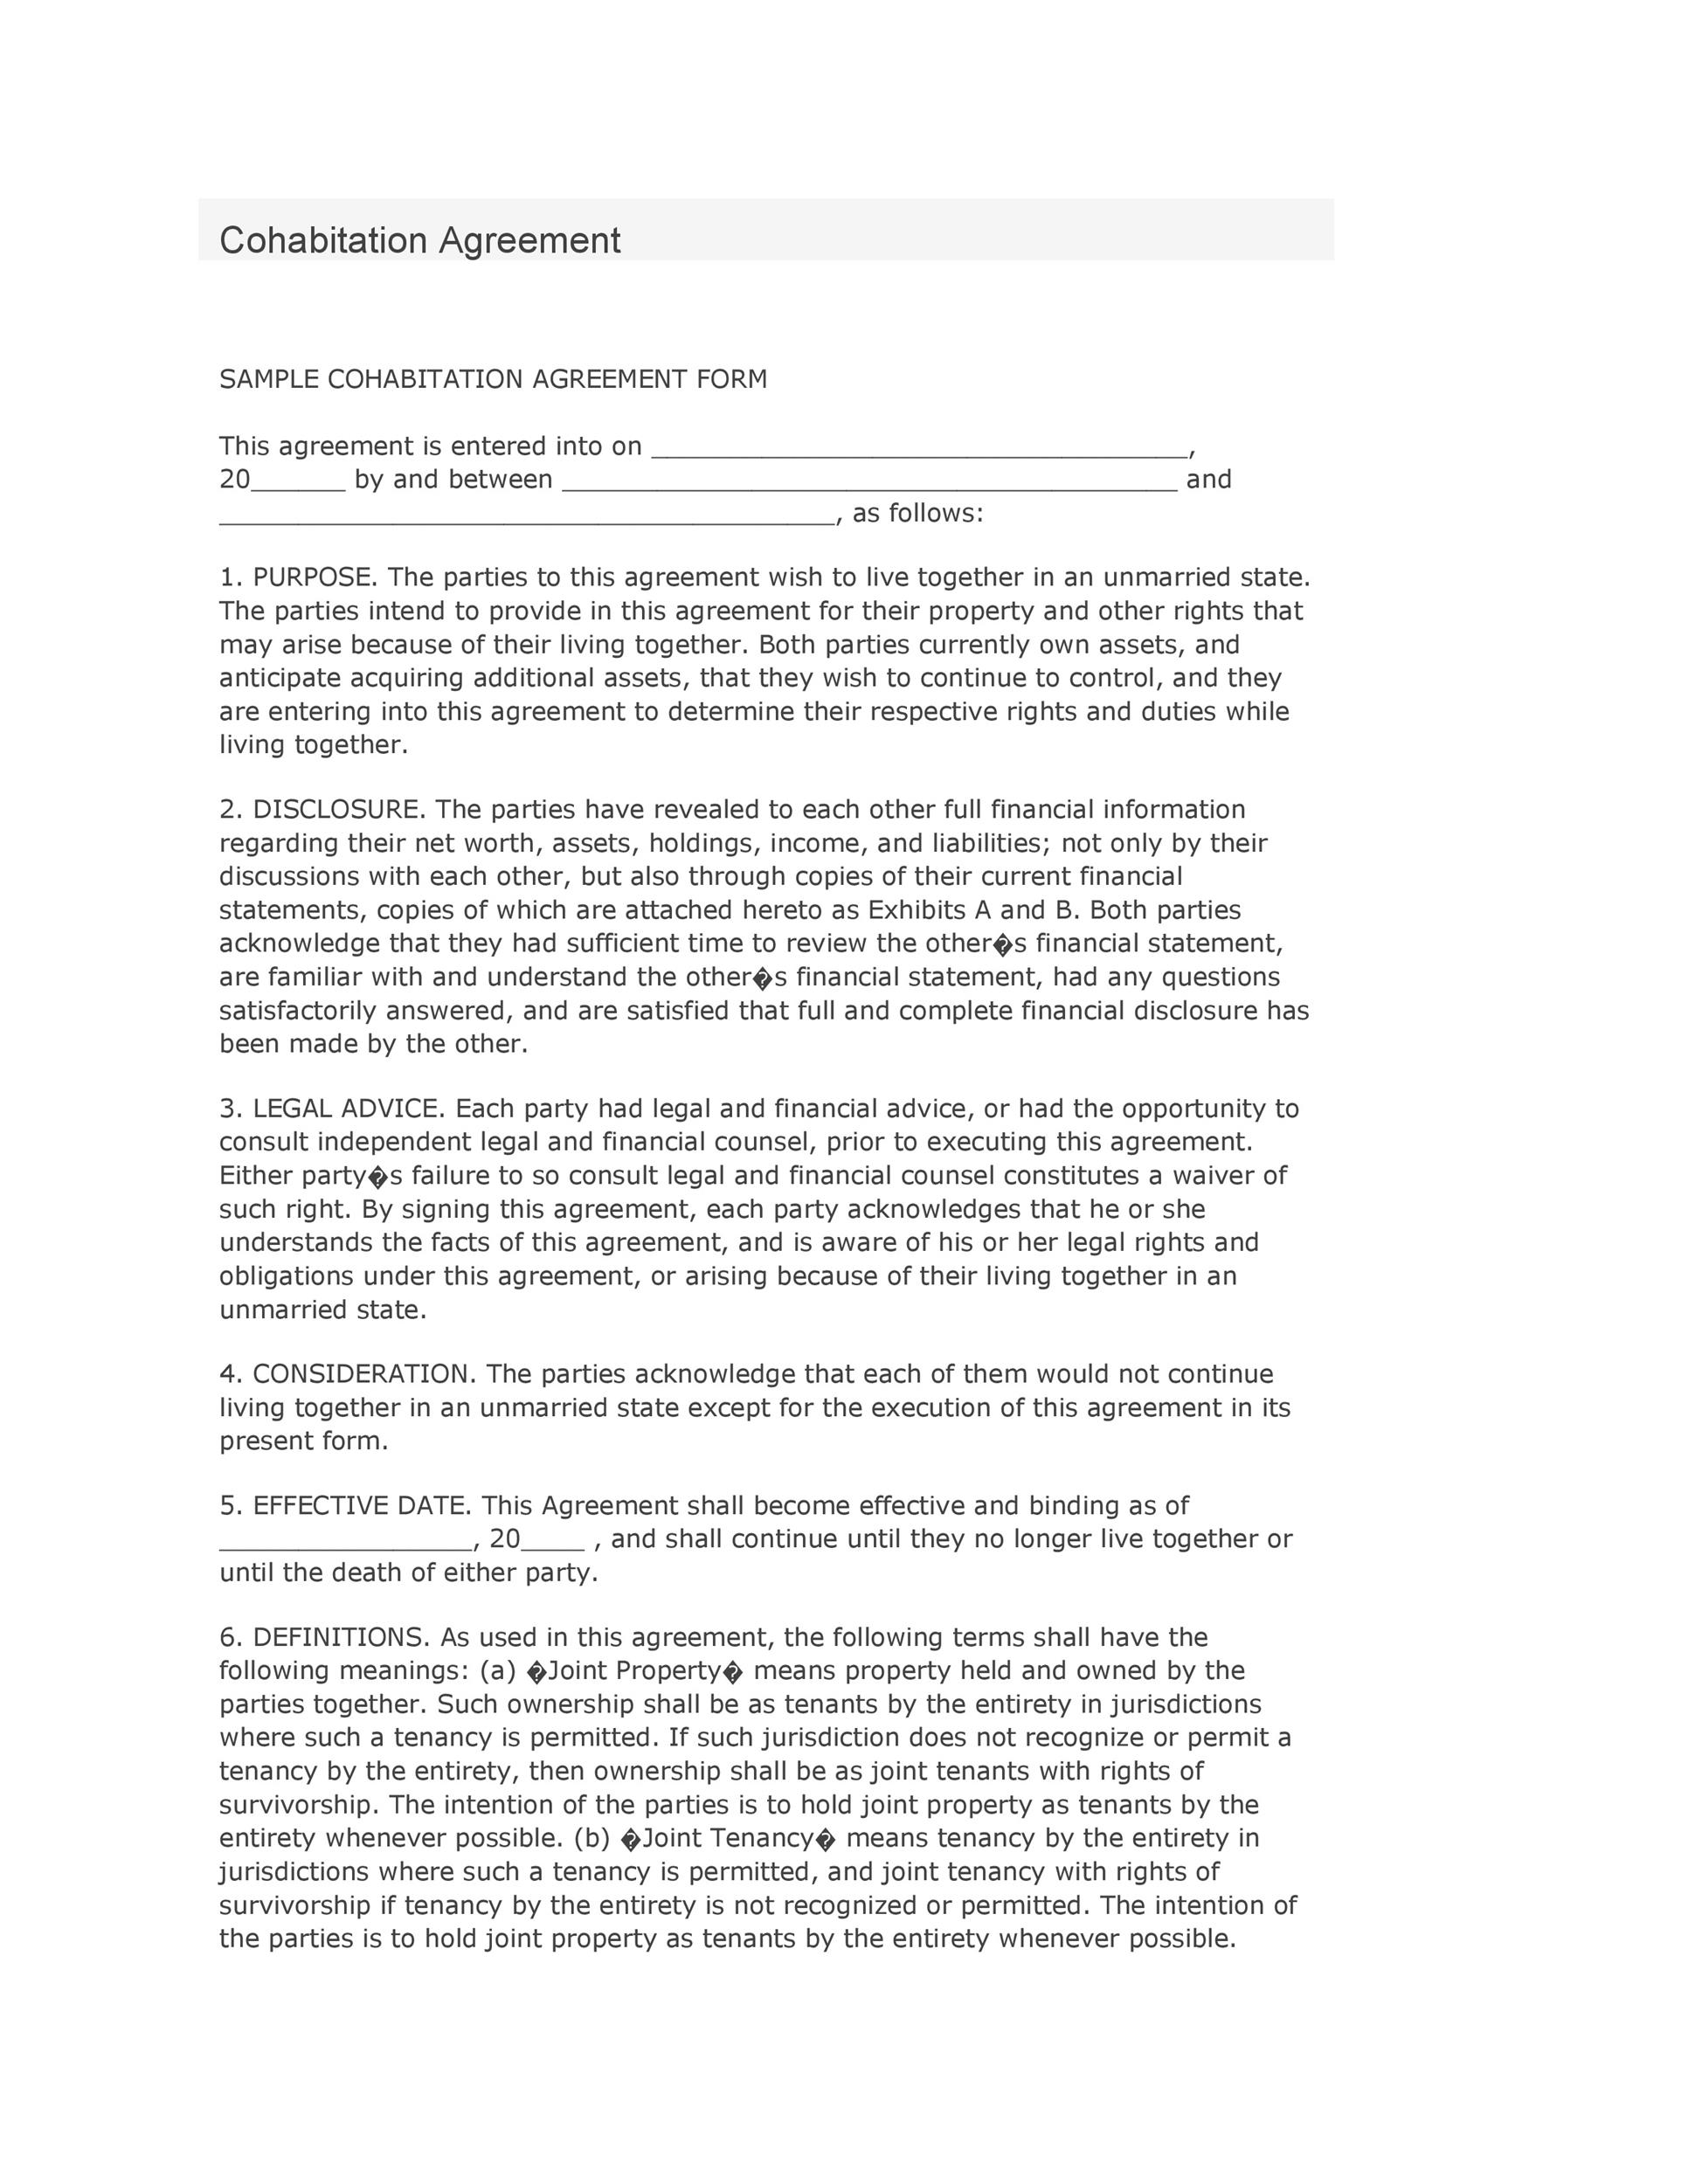 Free cohabitation agreement template 09